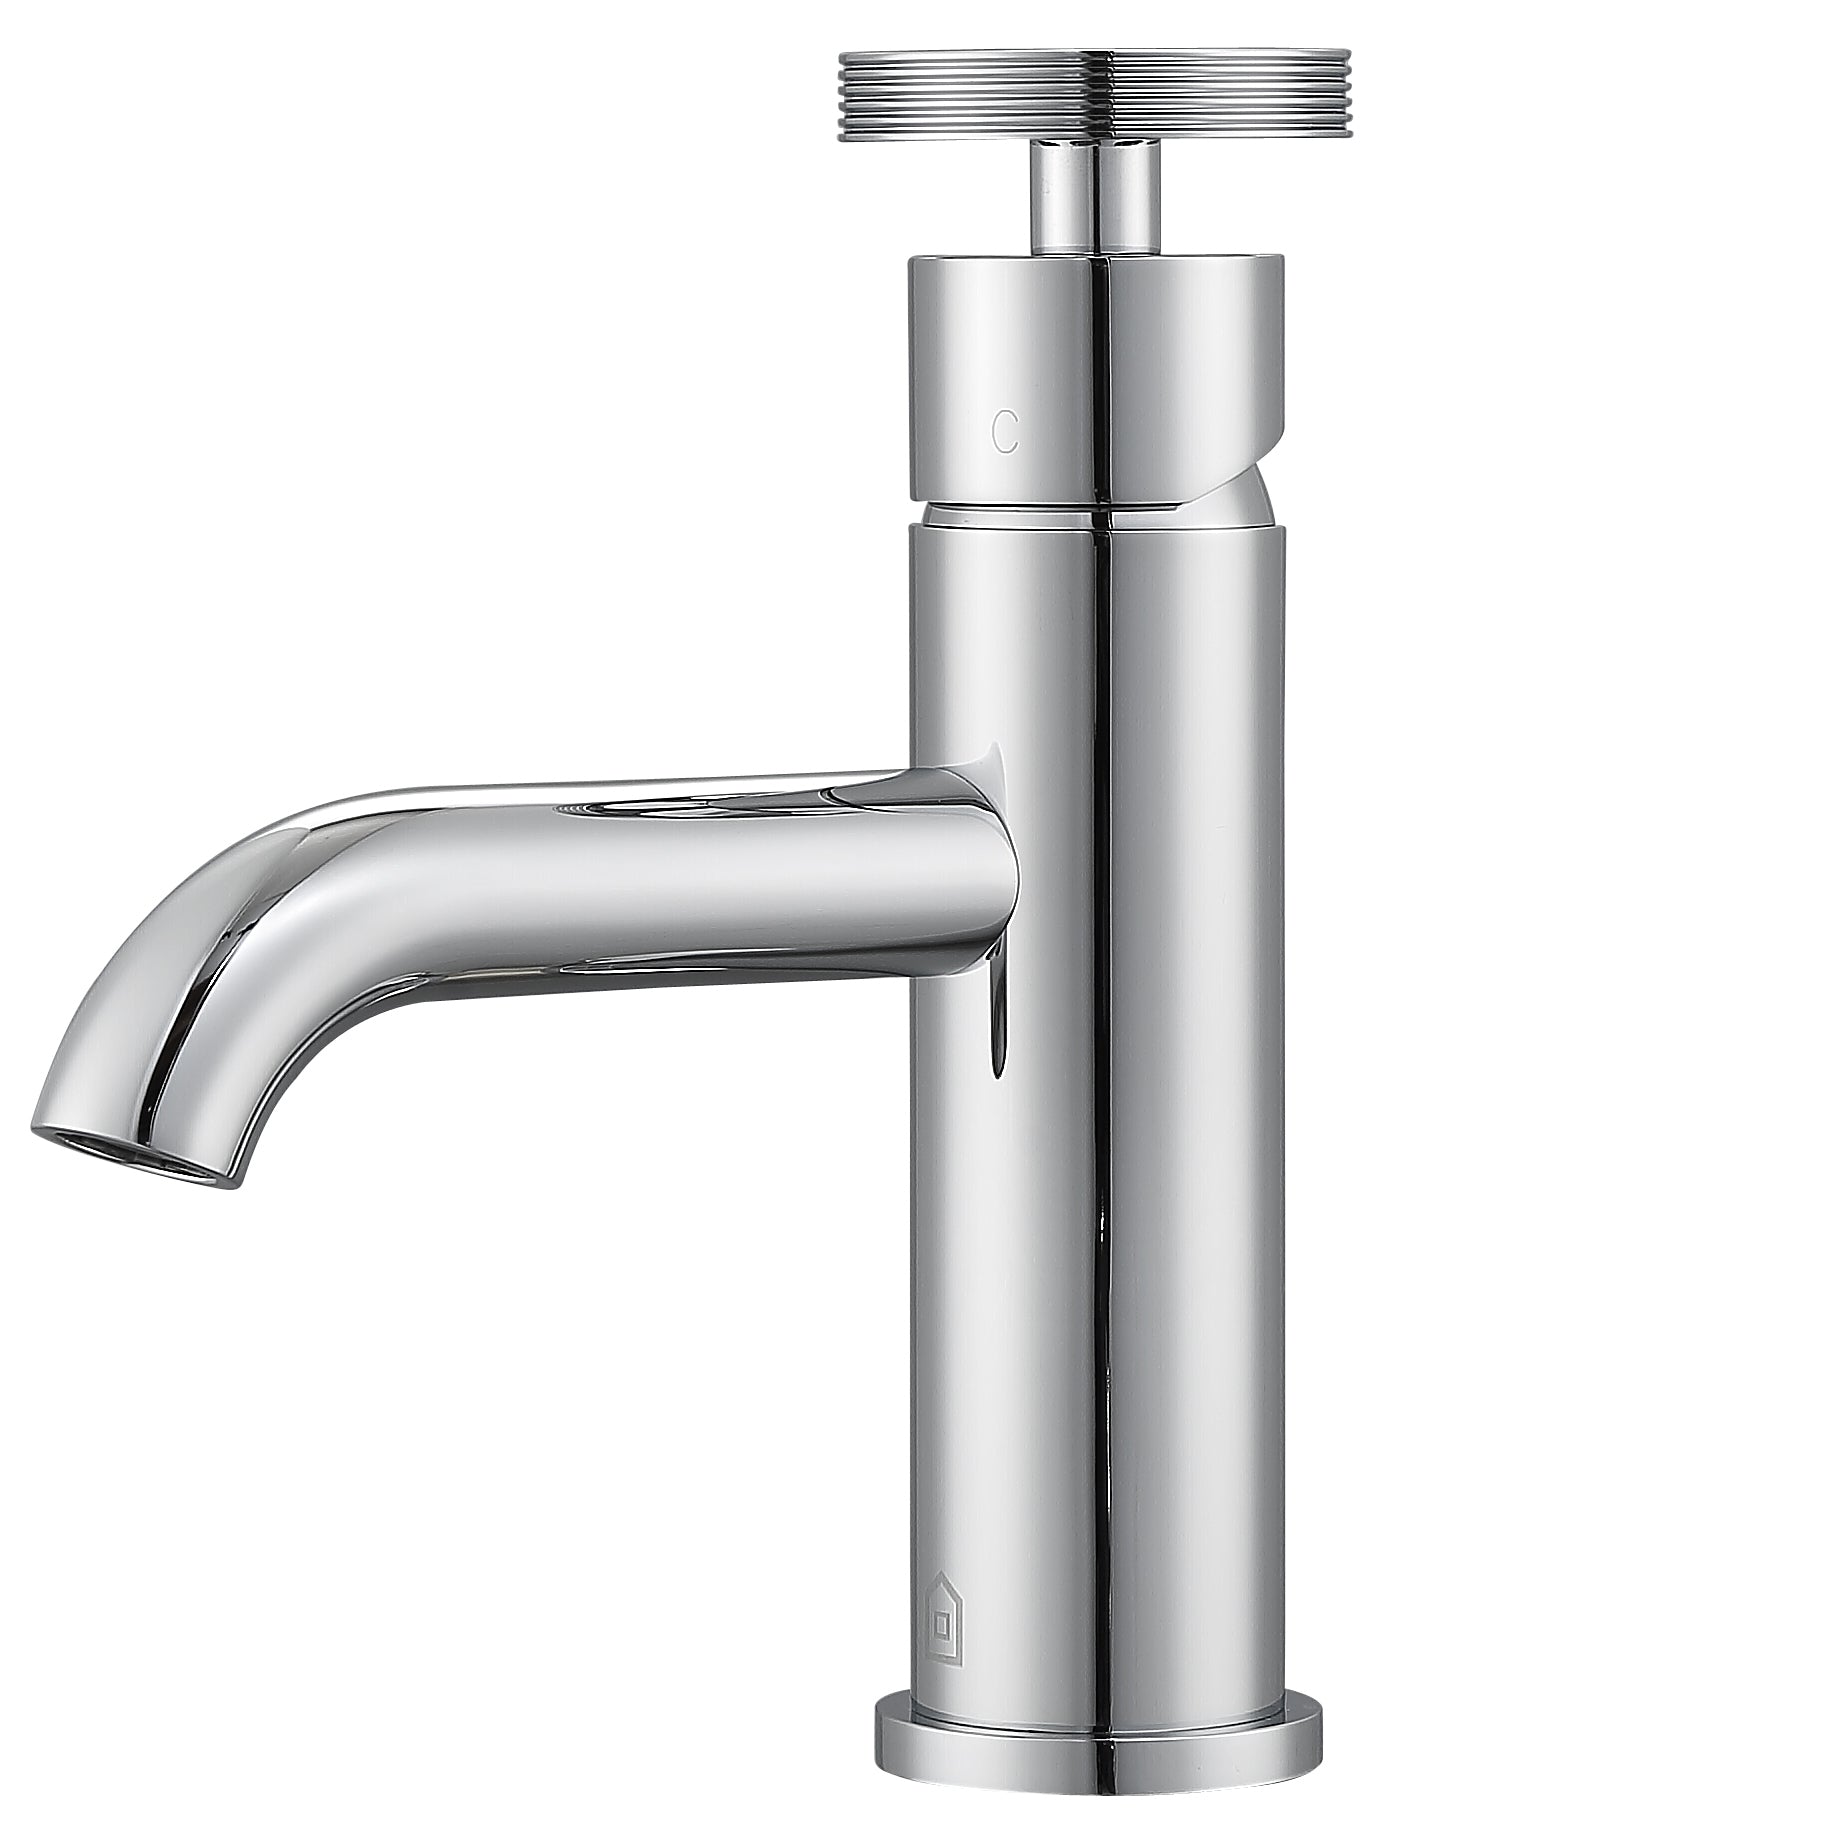 Ancona Nova Series Single Lever Bathroom Faucet in Chrome